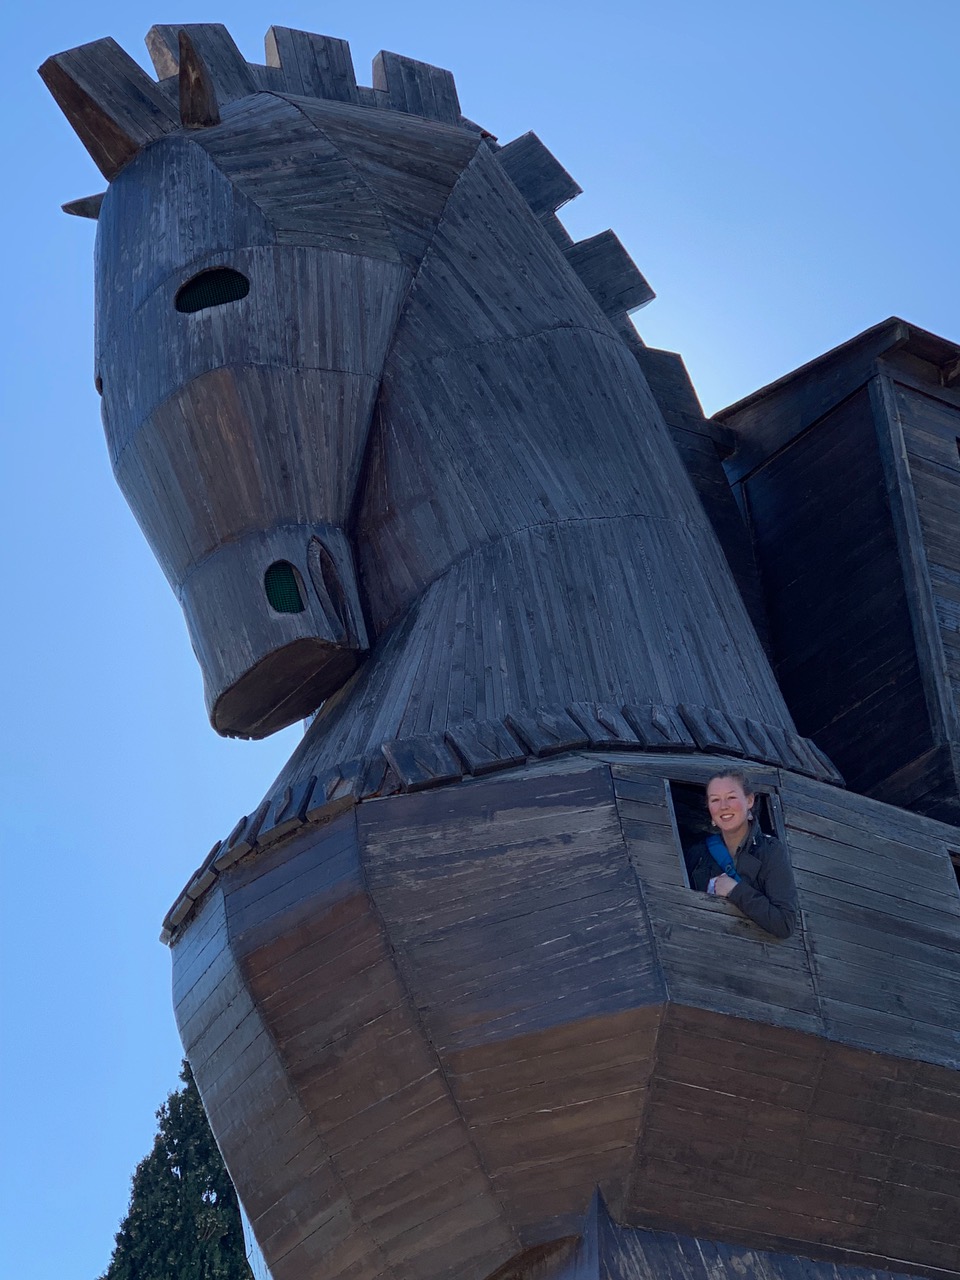 peeking out of the Trojan horse